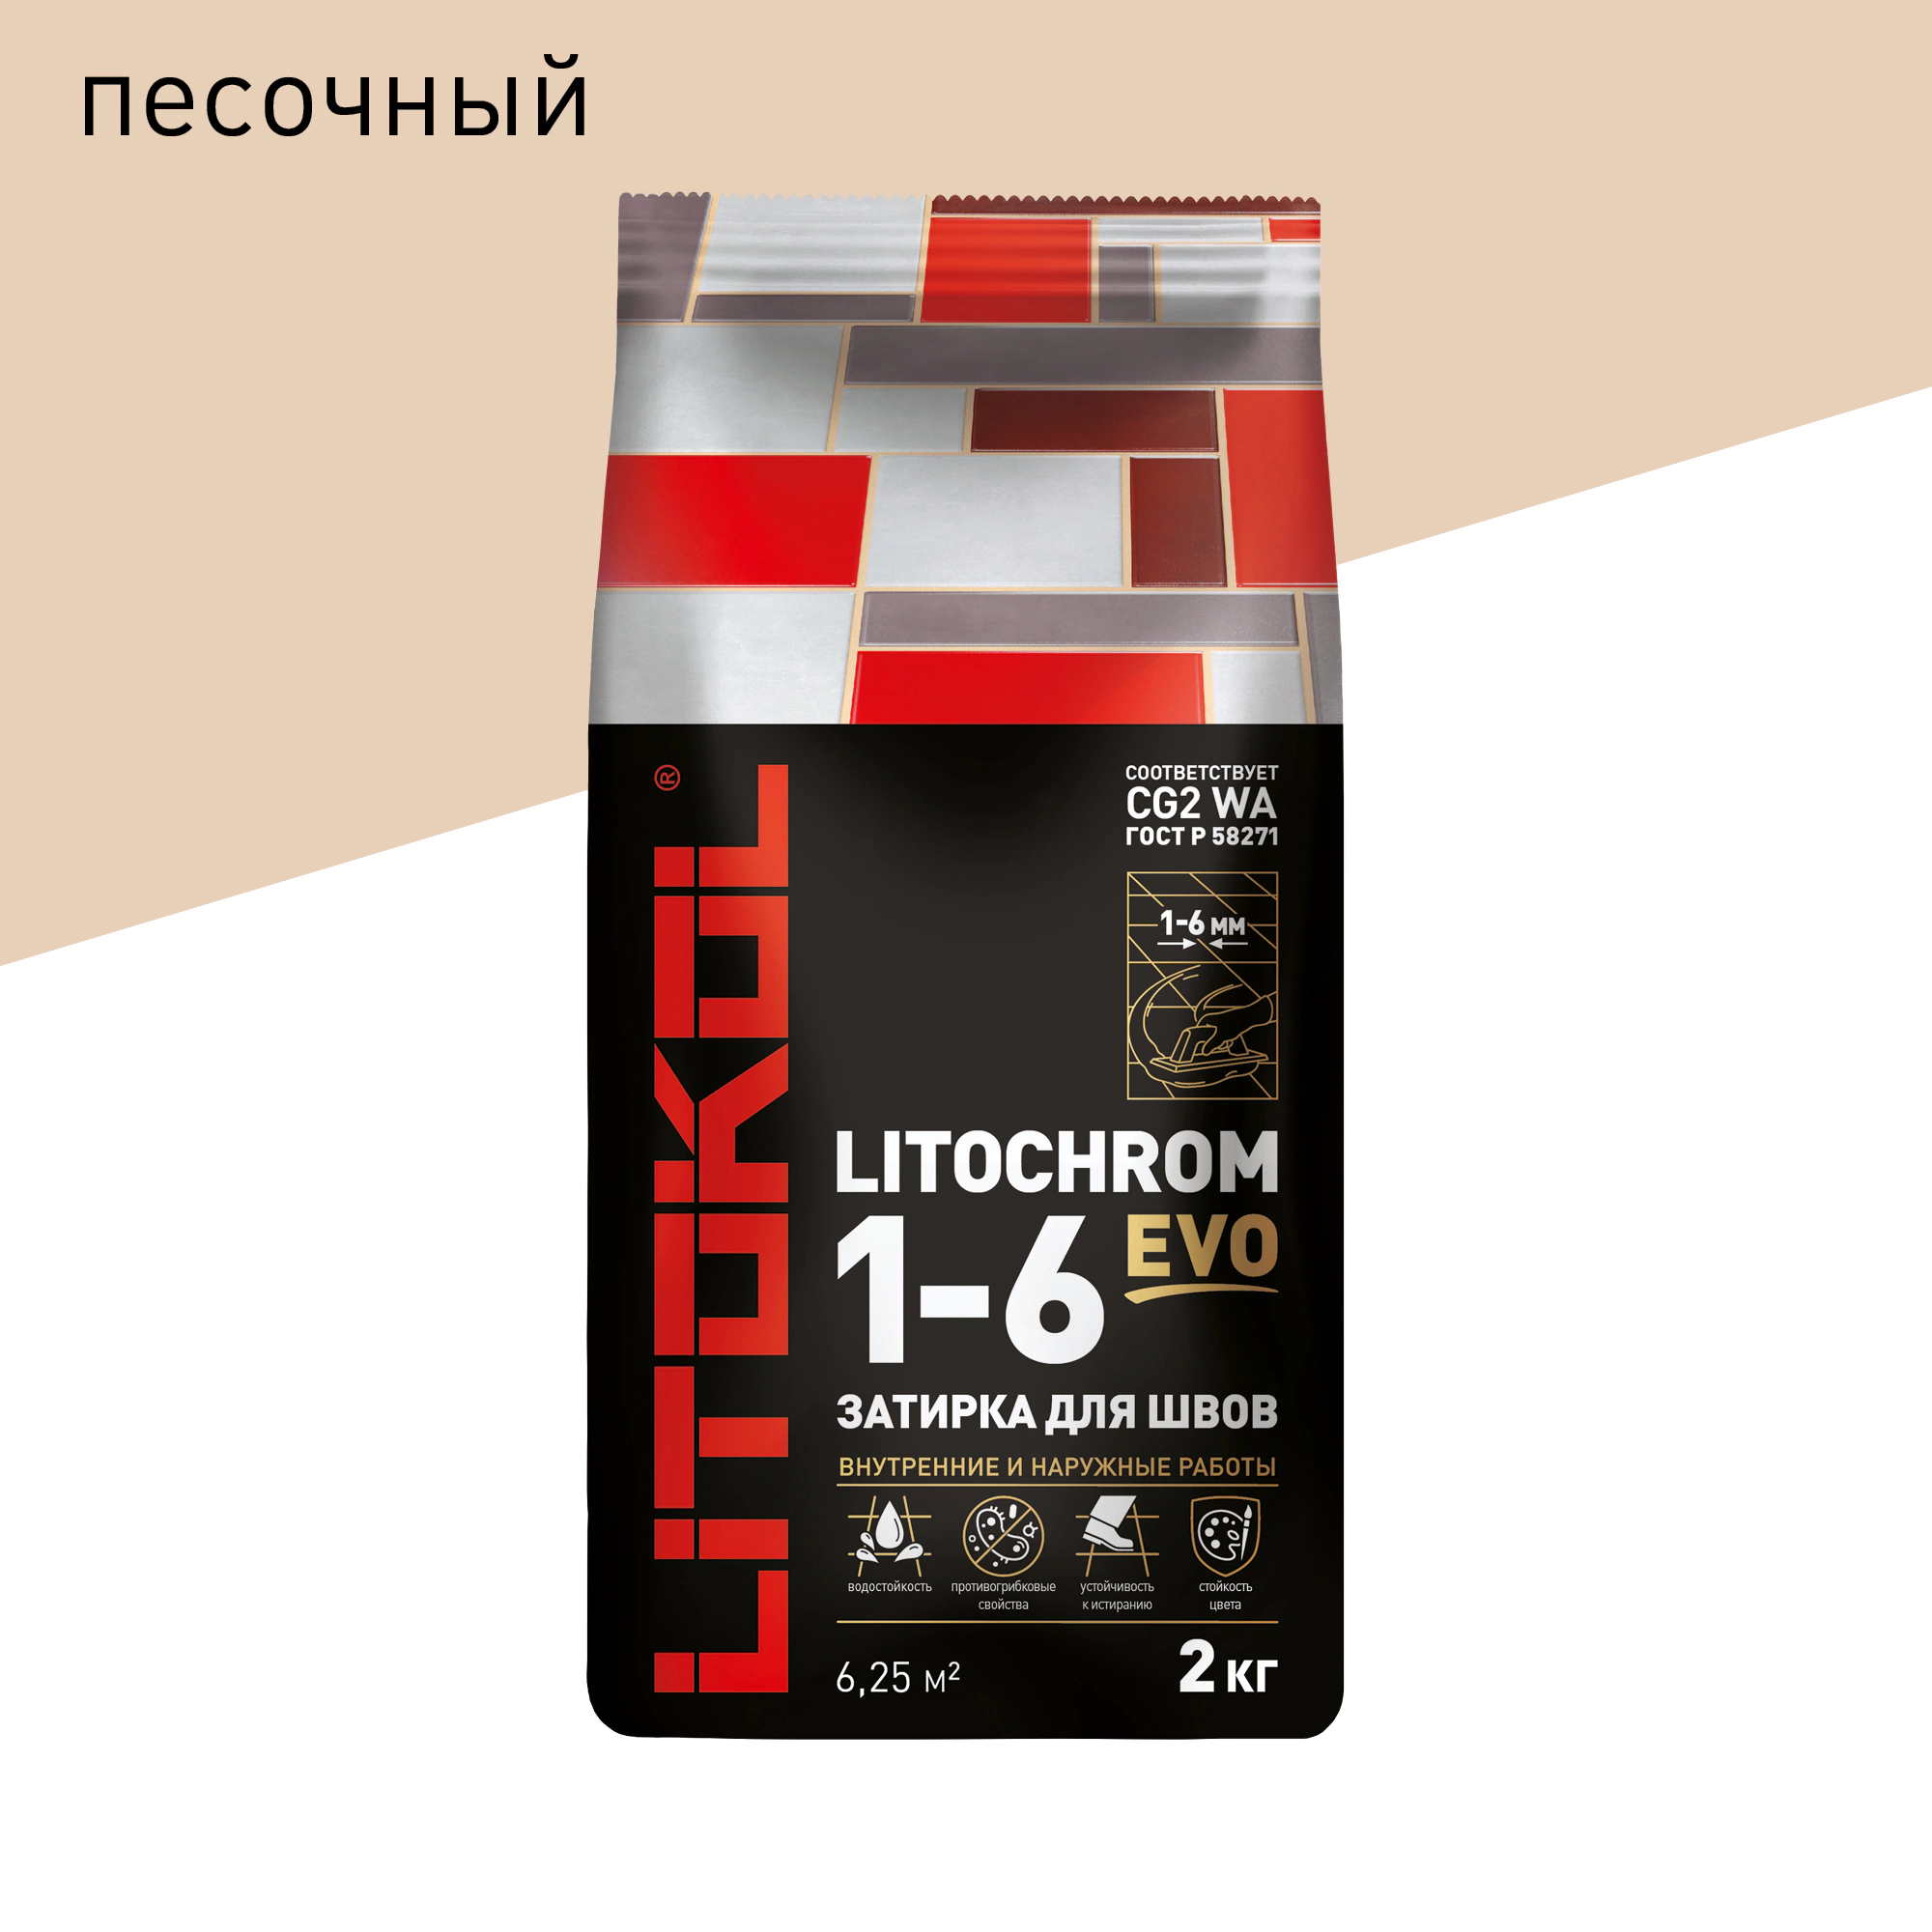 Затирка для швов LITOKOL LITOCHROM 1-6 EVO LE 220 песочный 2 кг